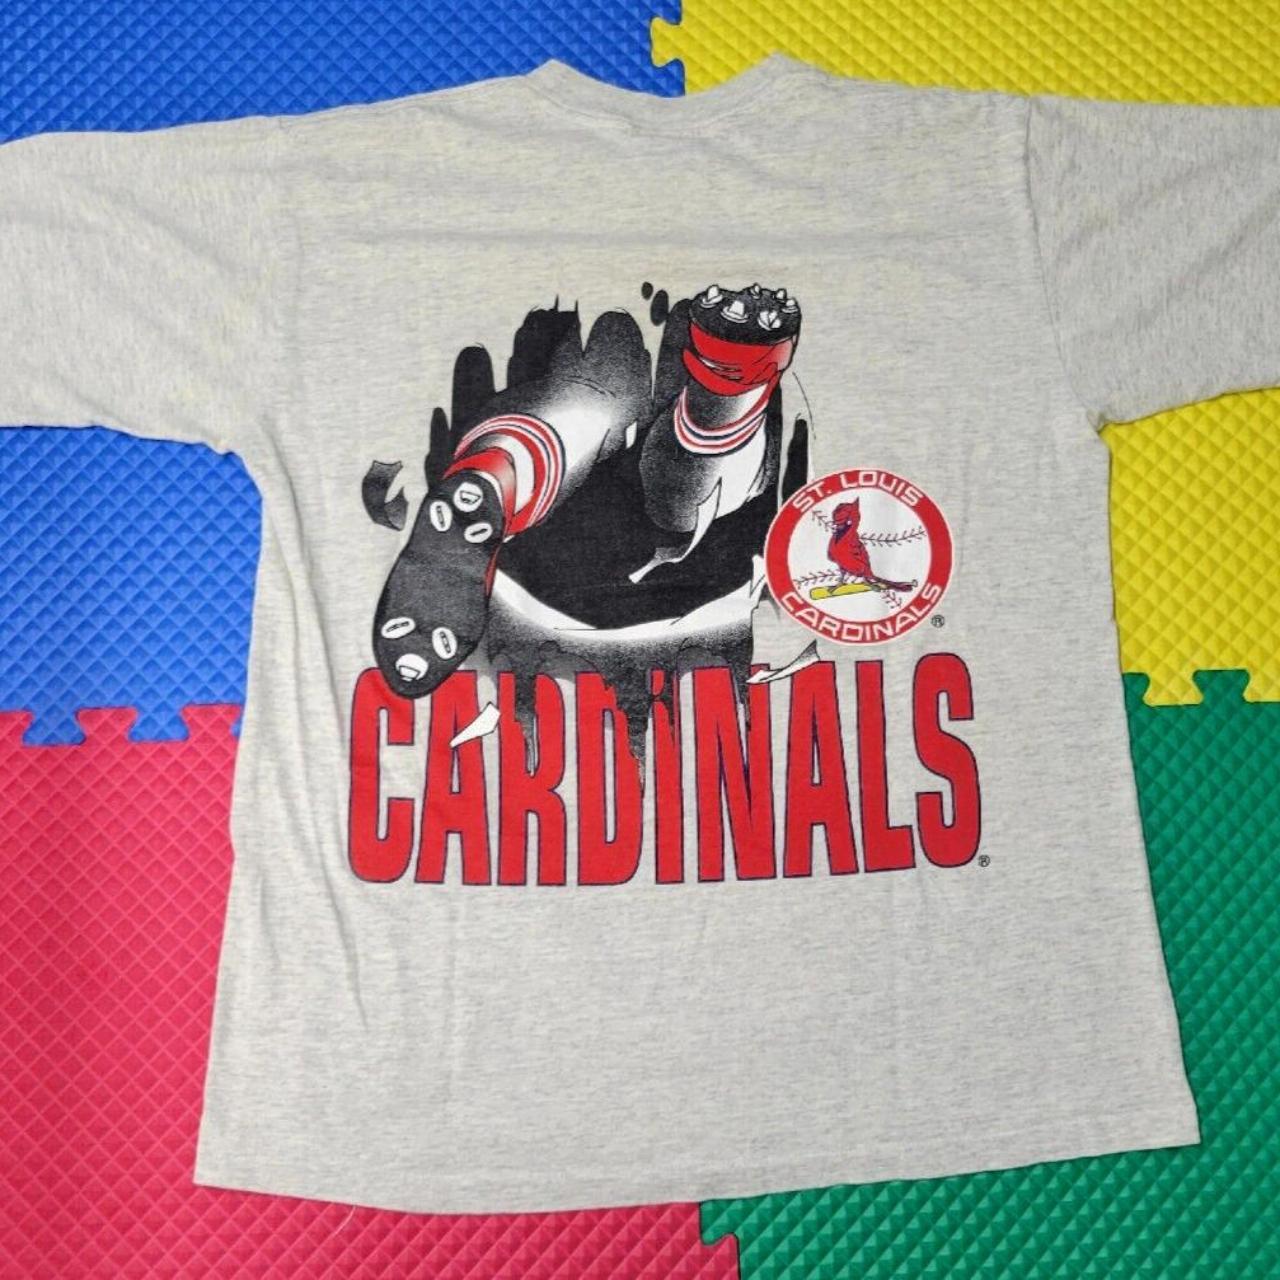 Vintage 90s Red Nutmeg Athletic Dept MLB St Louis Cardinals T